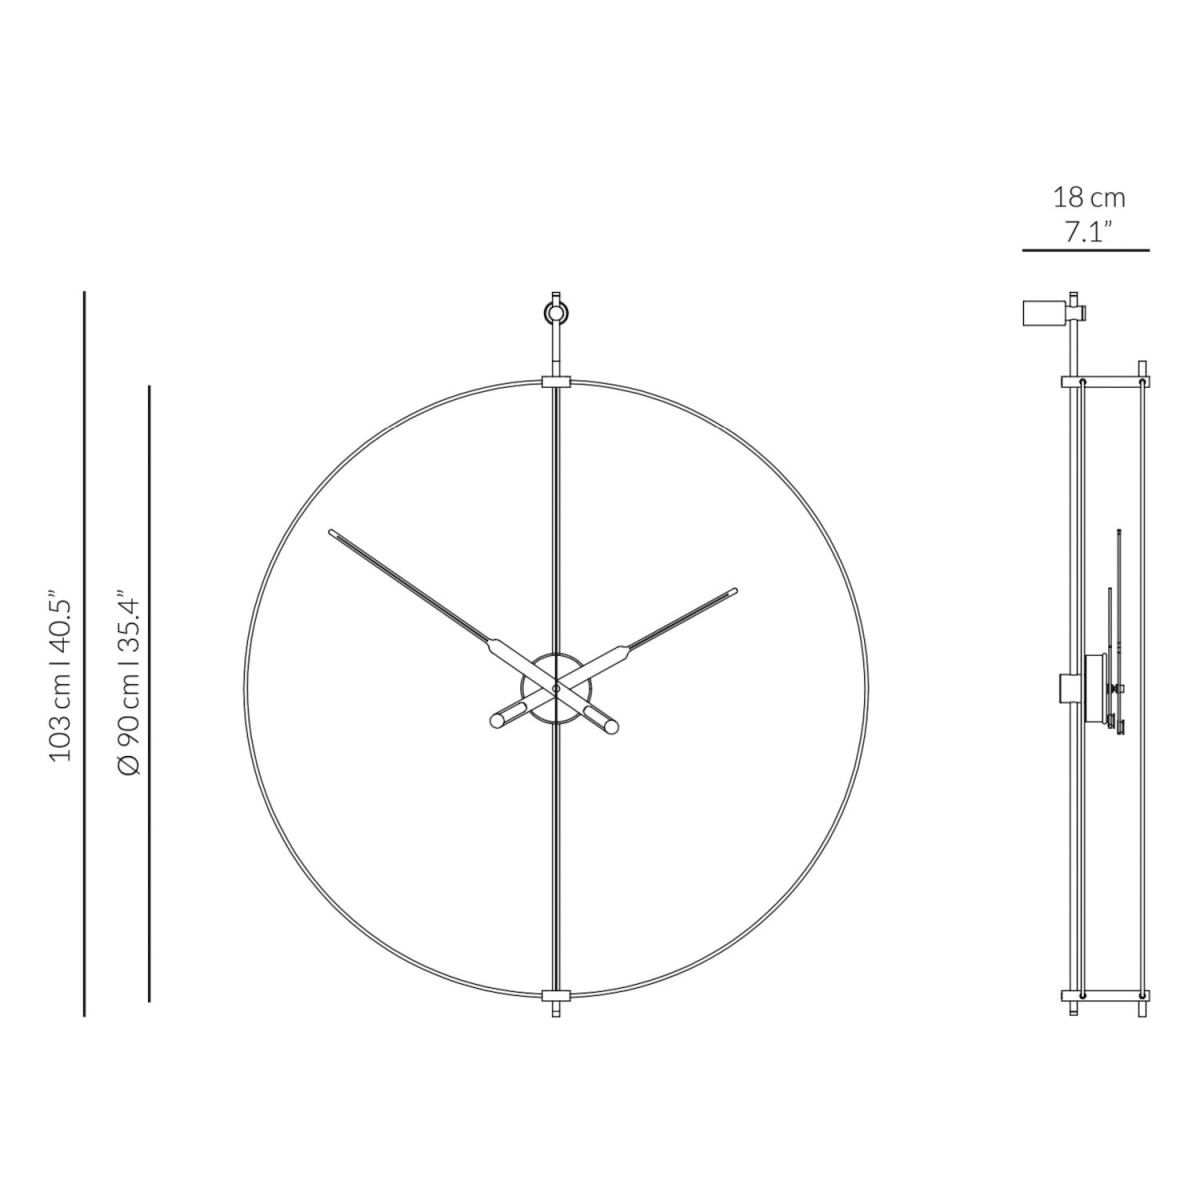 Double Ring Design Wall Clock "Barcelona Premium" Ø 90 cm